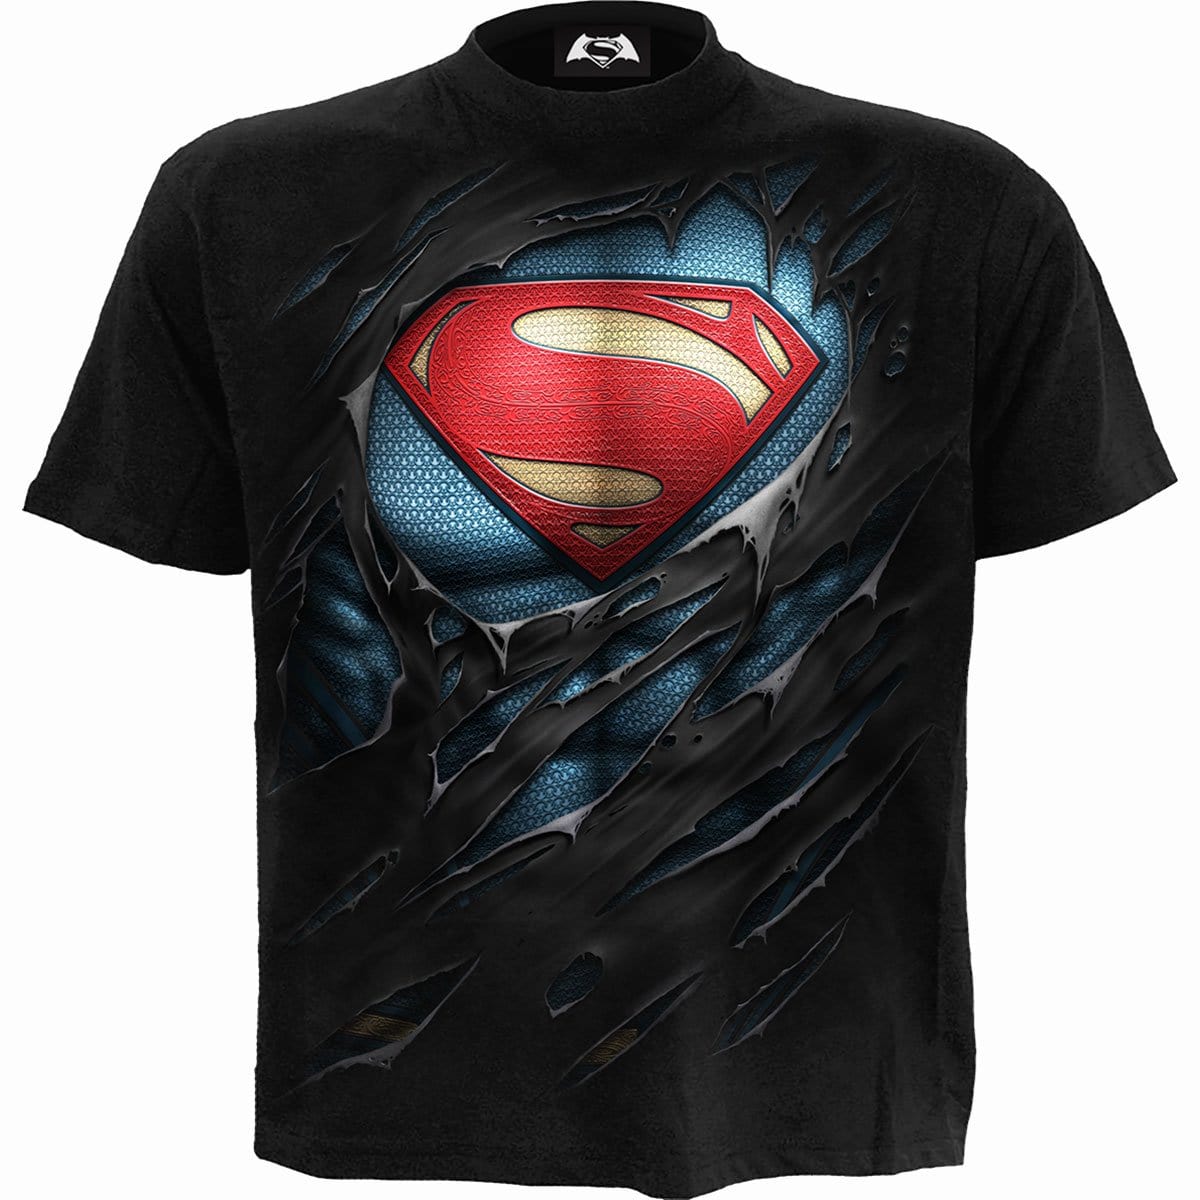 SUPERMAN - RIPPED - T-Shirt Black